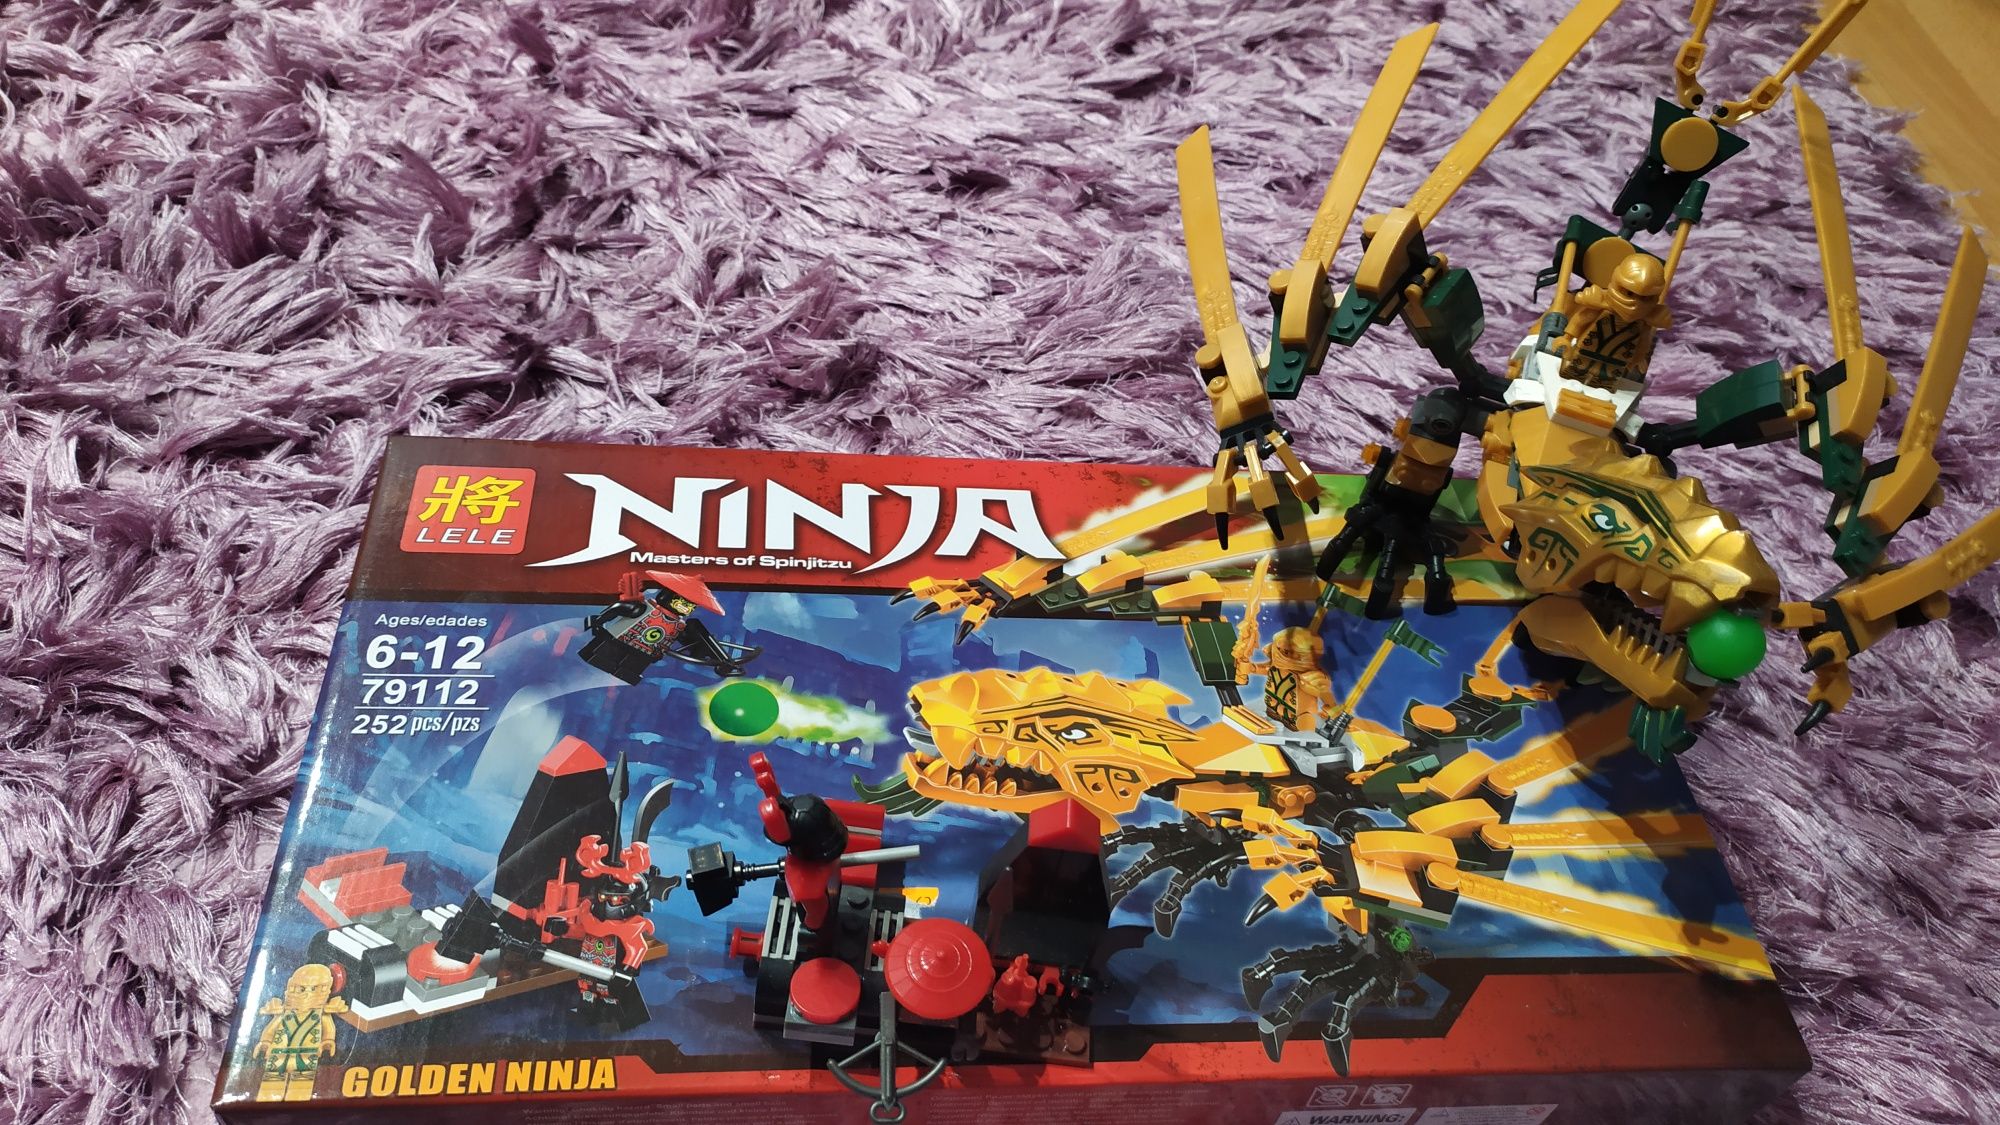 Ninja Masters of Spinjitzu